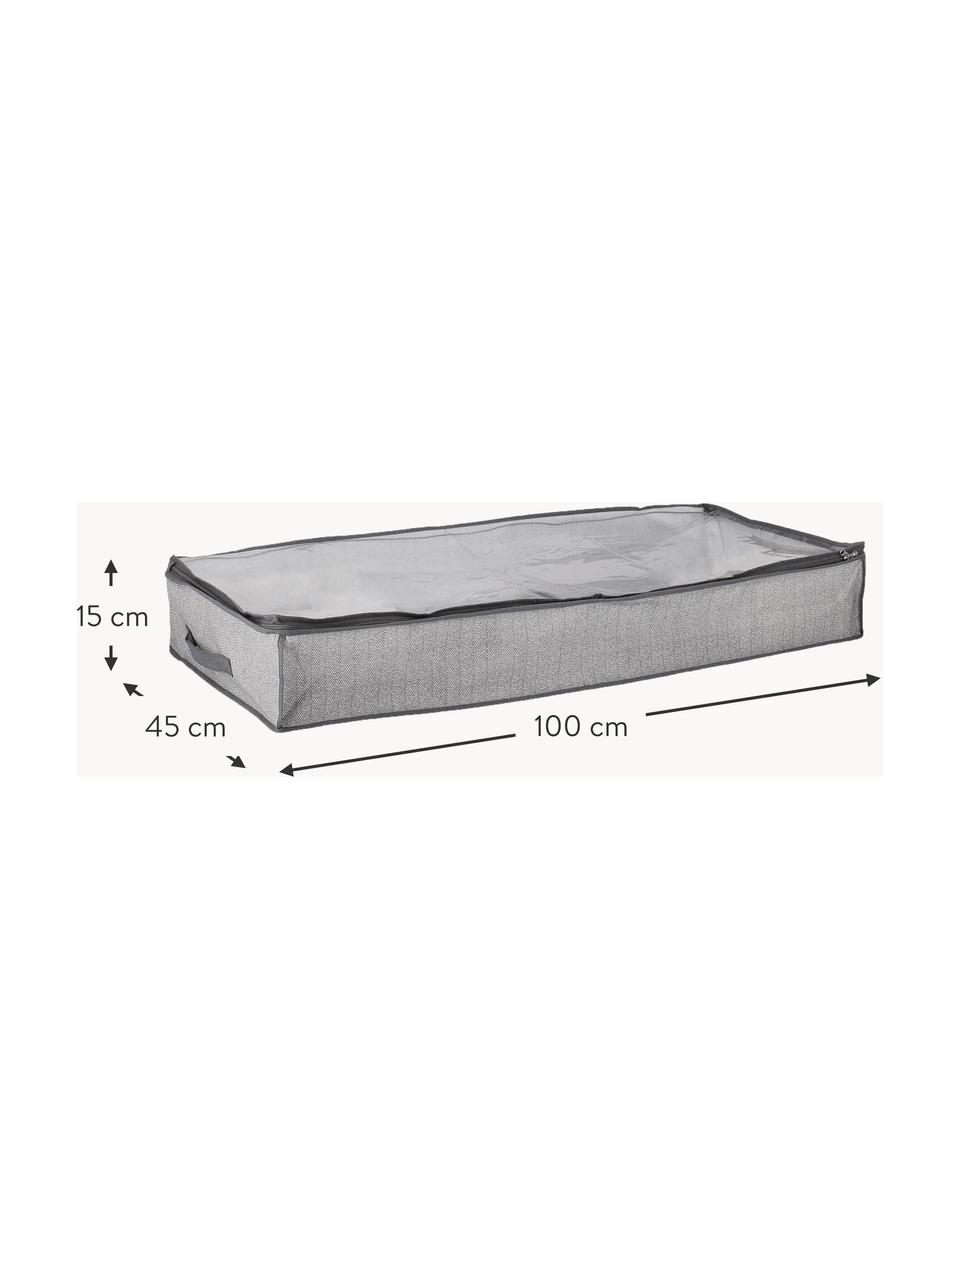 Úložný box Tidy, Umělé vlákno, Odstíny šedé, Š 100 cm, H 45 cm